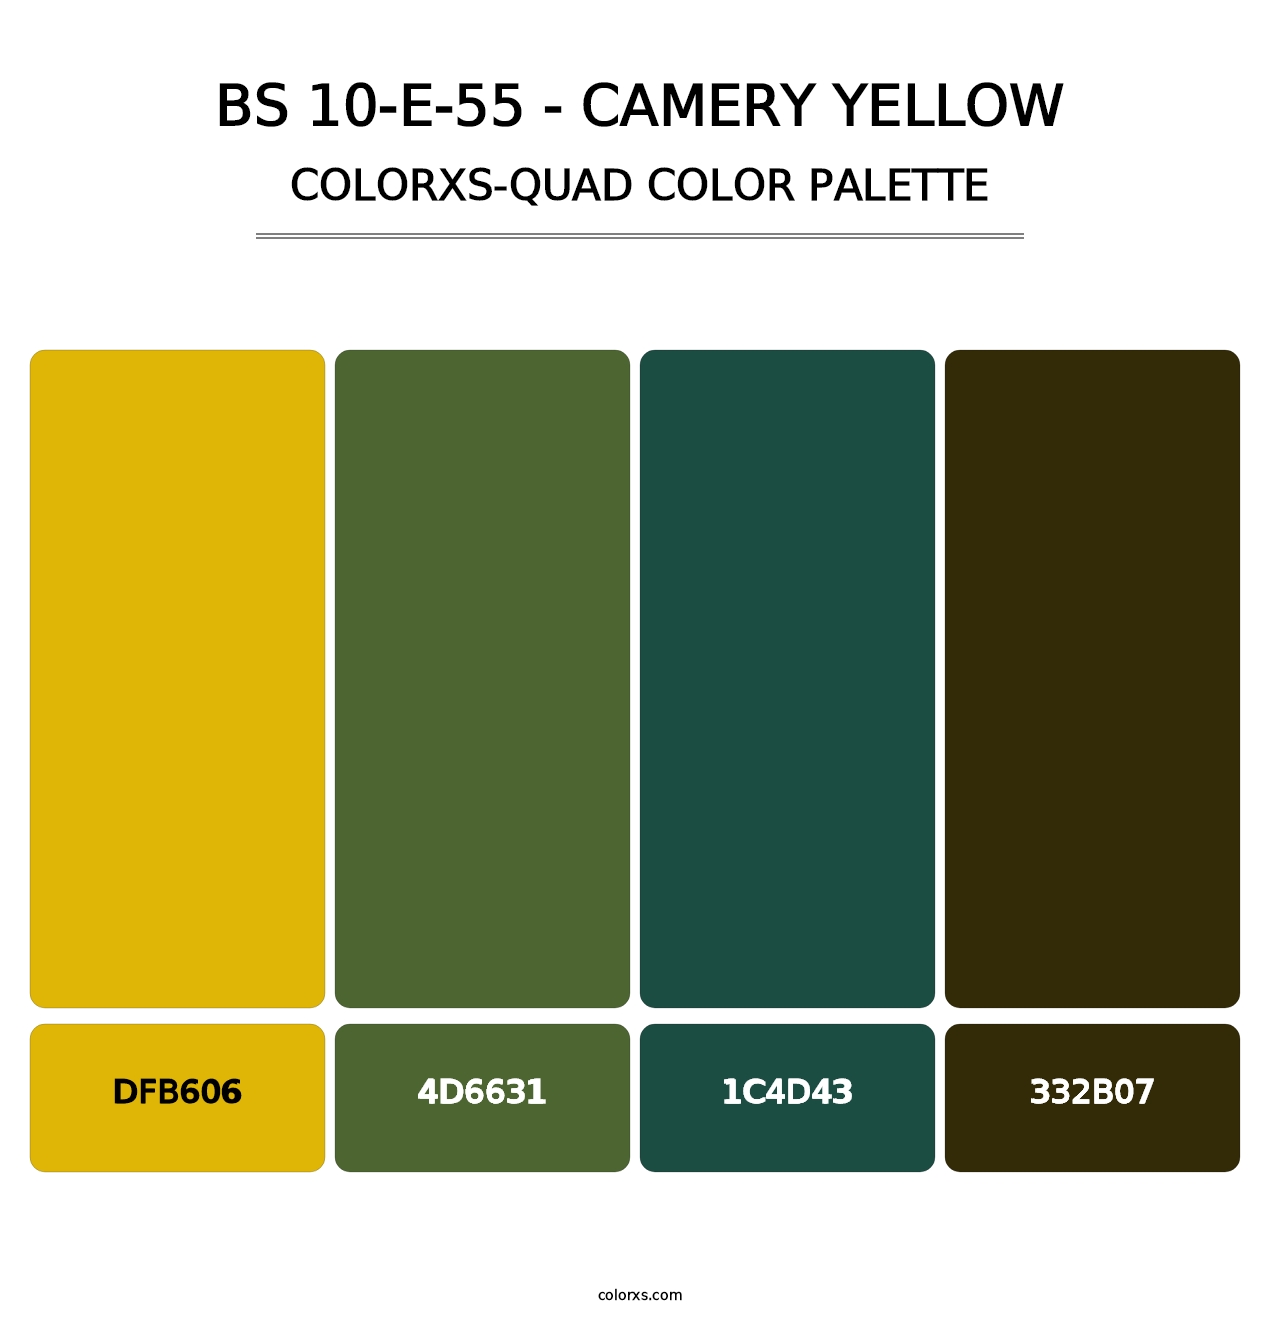 BS 10-E-55 - Camery Yellow - Colorxs Quad Palette